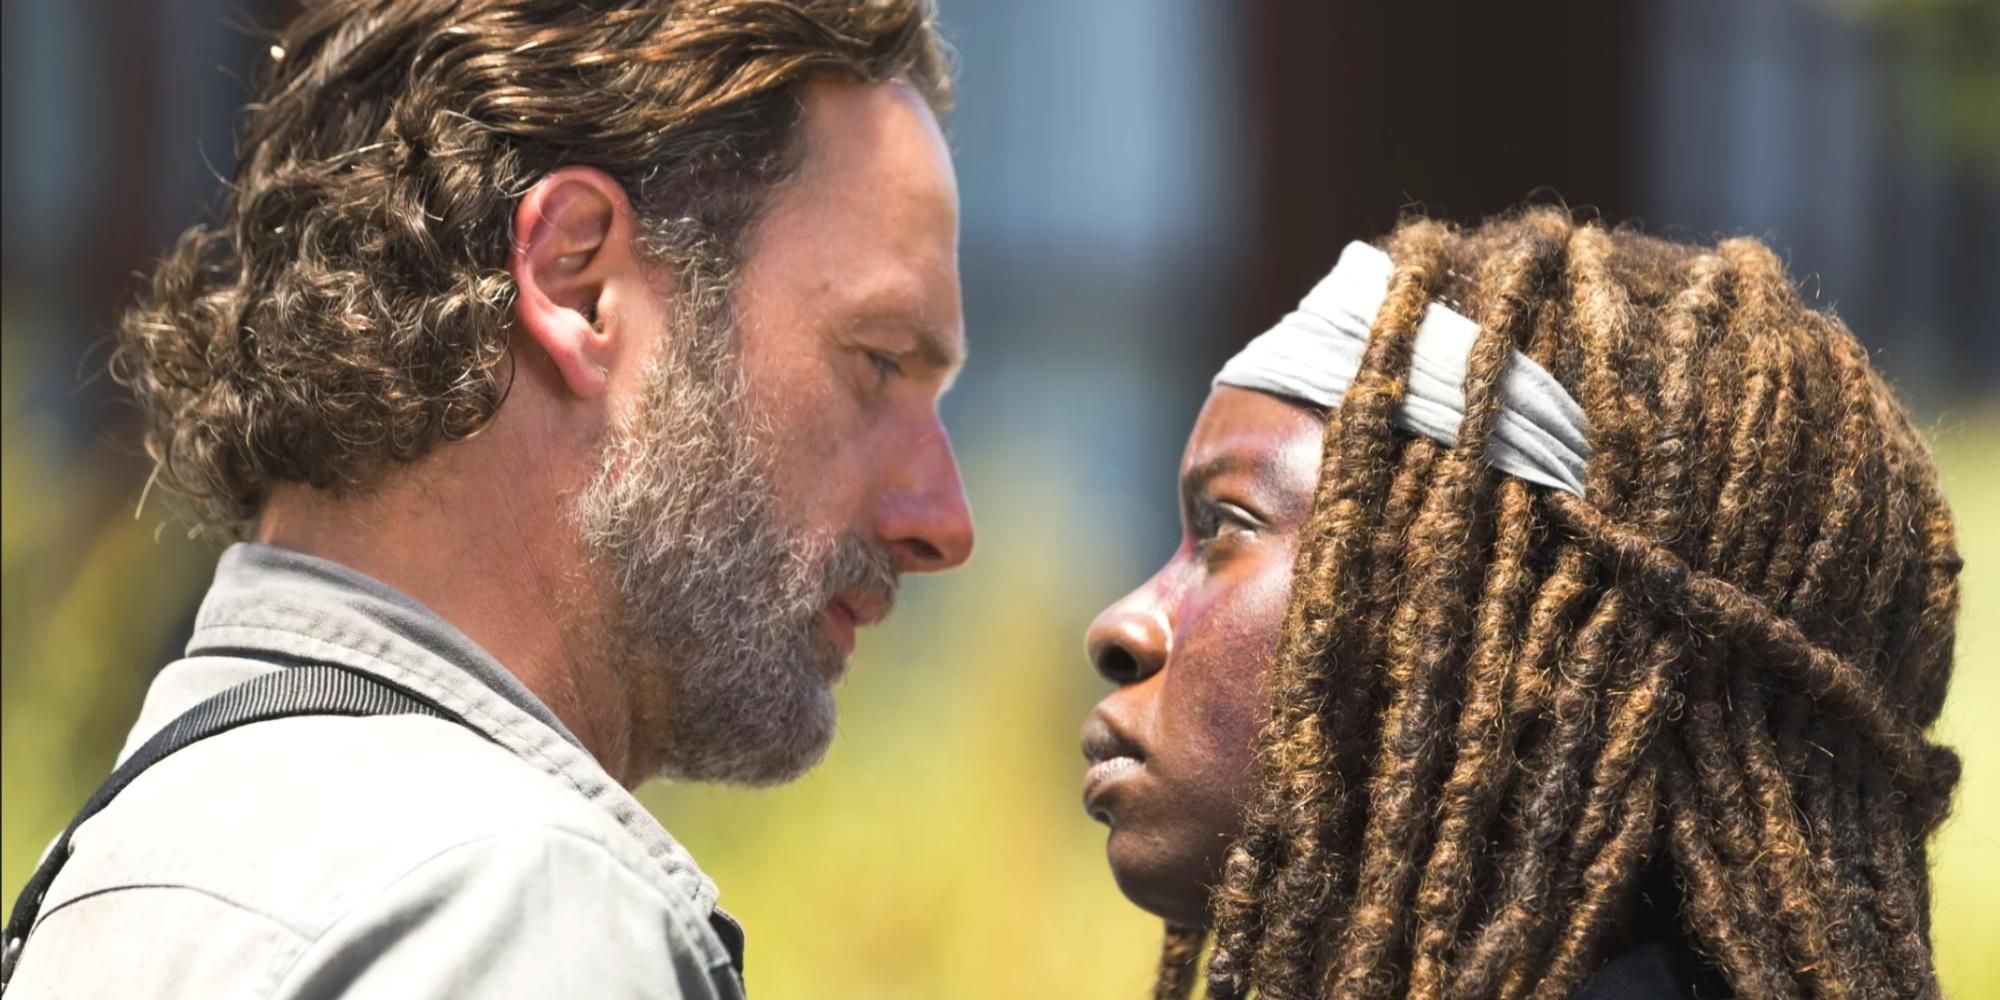 Danai Gurira als Michonne en Andrew Lincoln als Rick Grimes in The Walking Dead